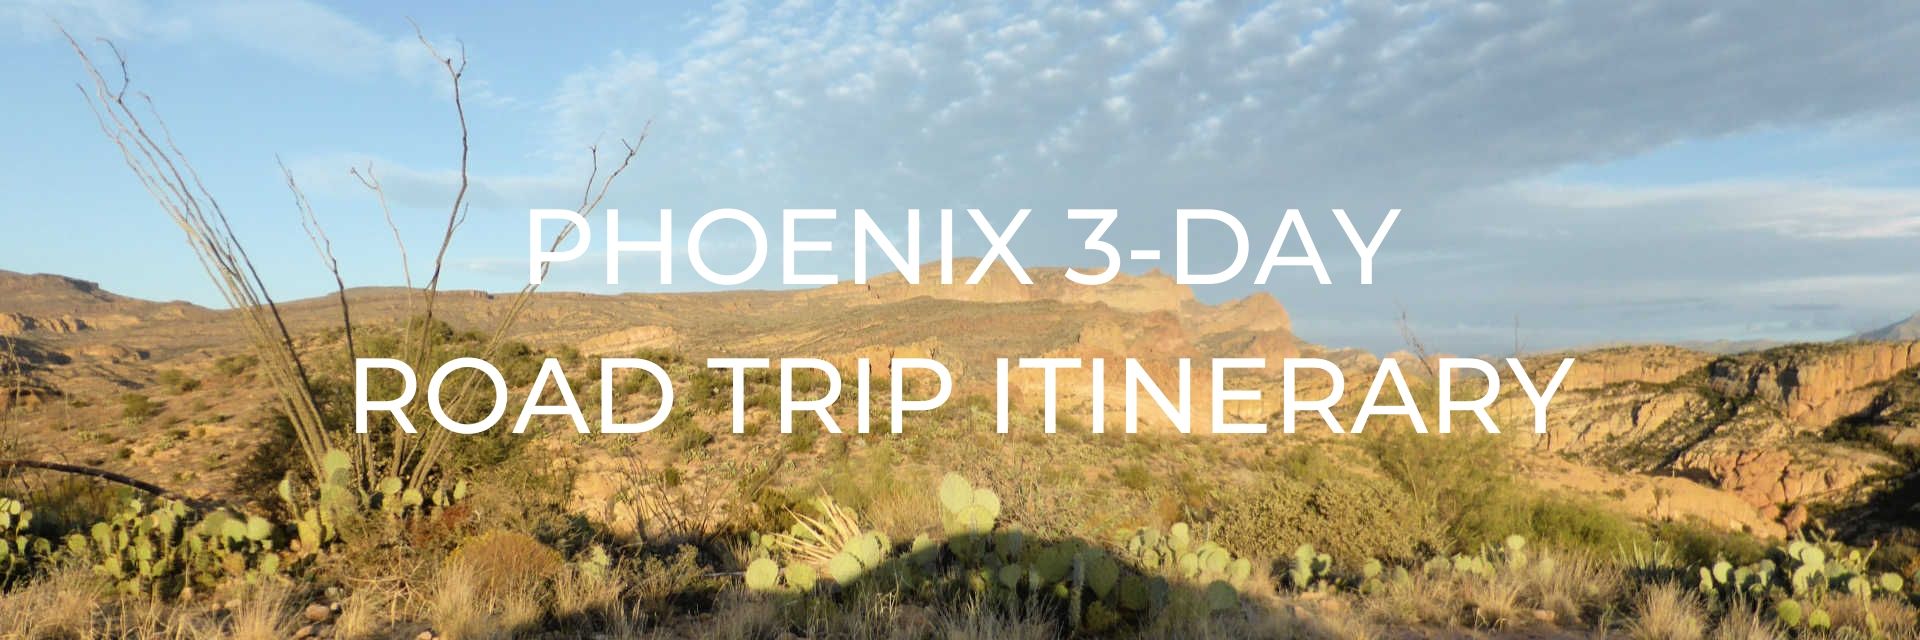 Phoenix Itinerary Desktop Image